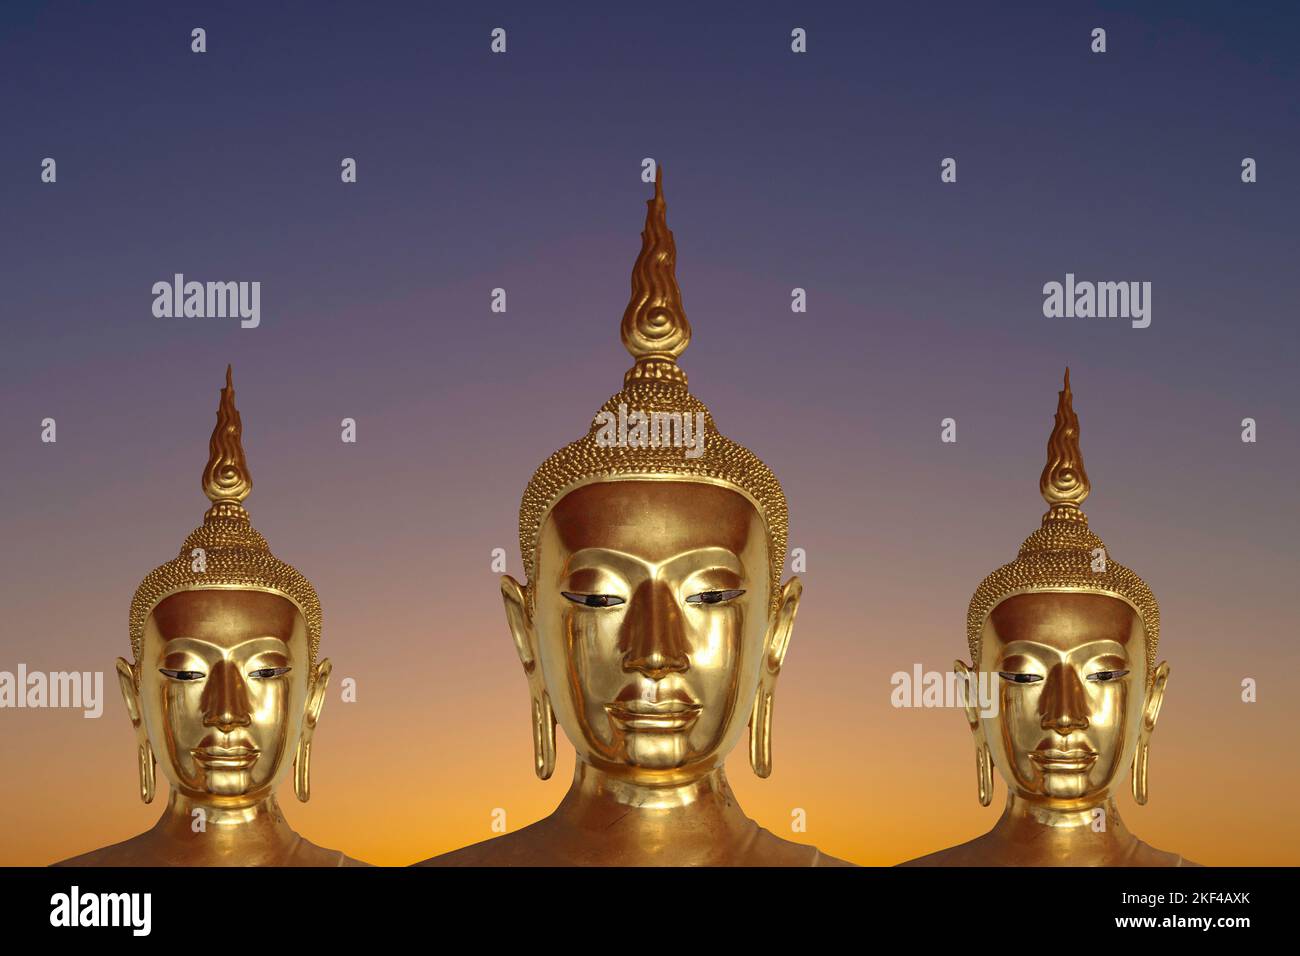 Asien, Buddha, Thailand, Buddha, Buddhas, drei, gold, goldene, frontal, Porträt, Porträts, Composing, Bangkok, Stock Photo